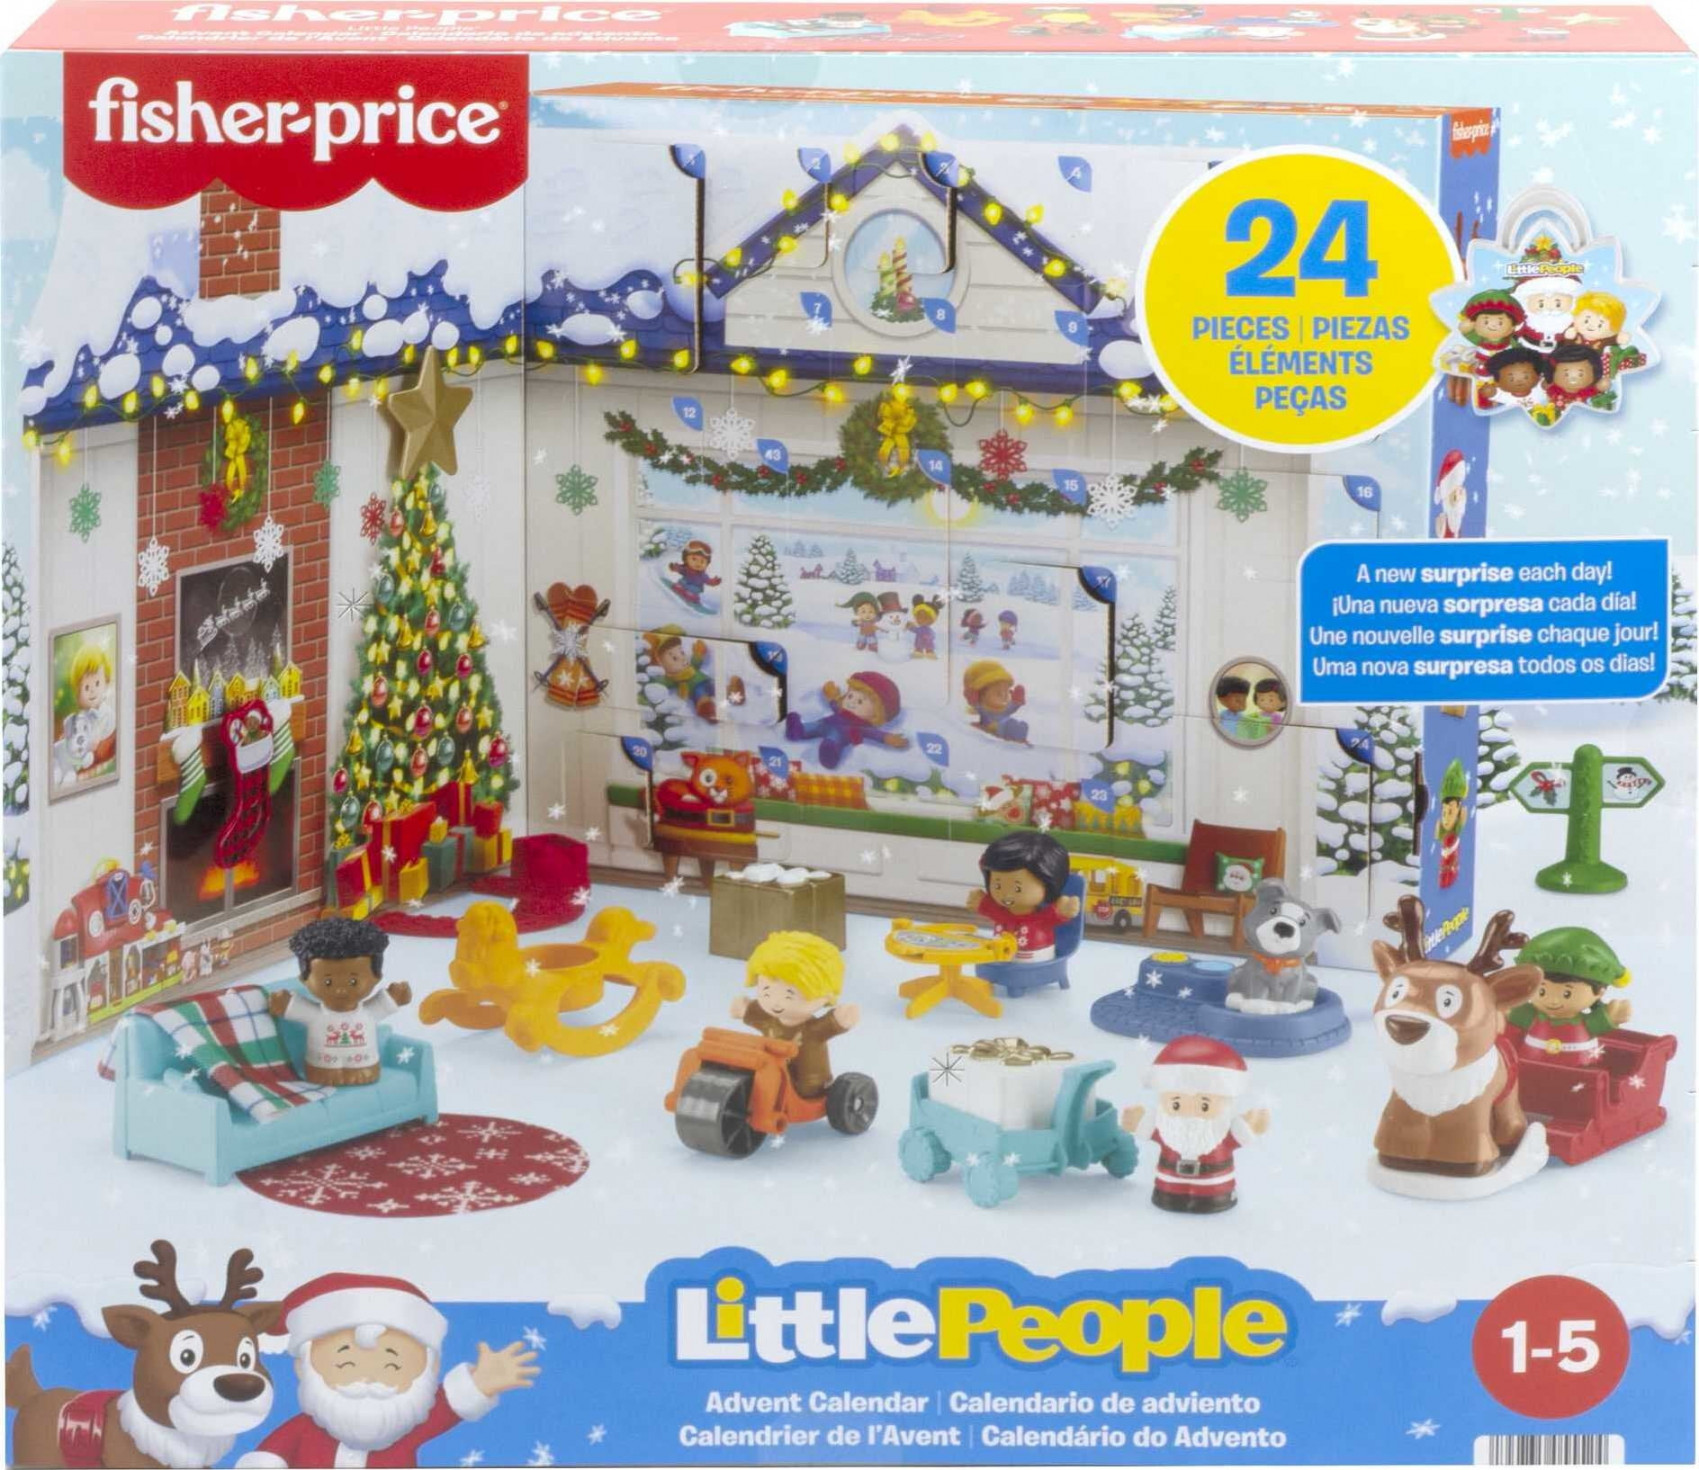 Little People Fisher-Price Advent Calendar Action Figure Set,  Pieces